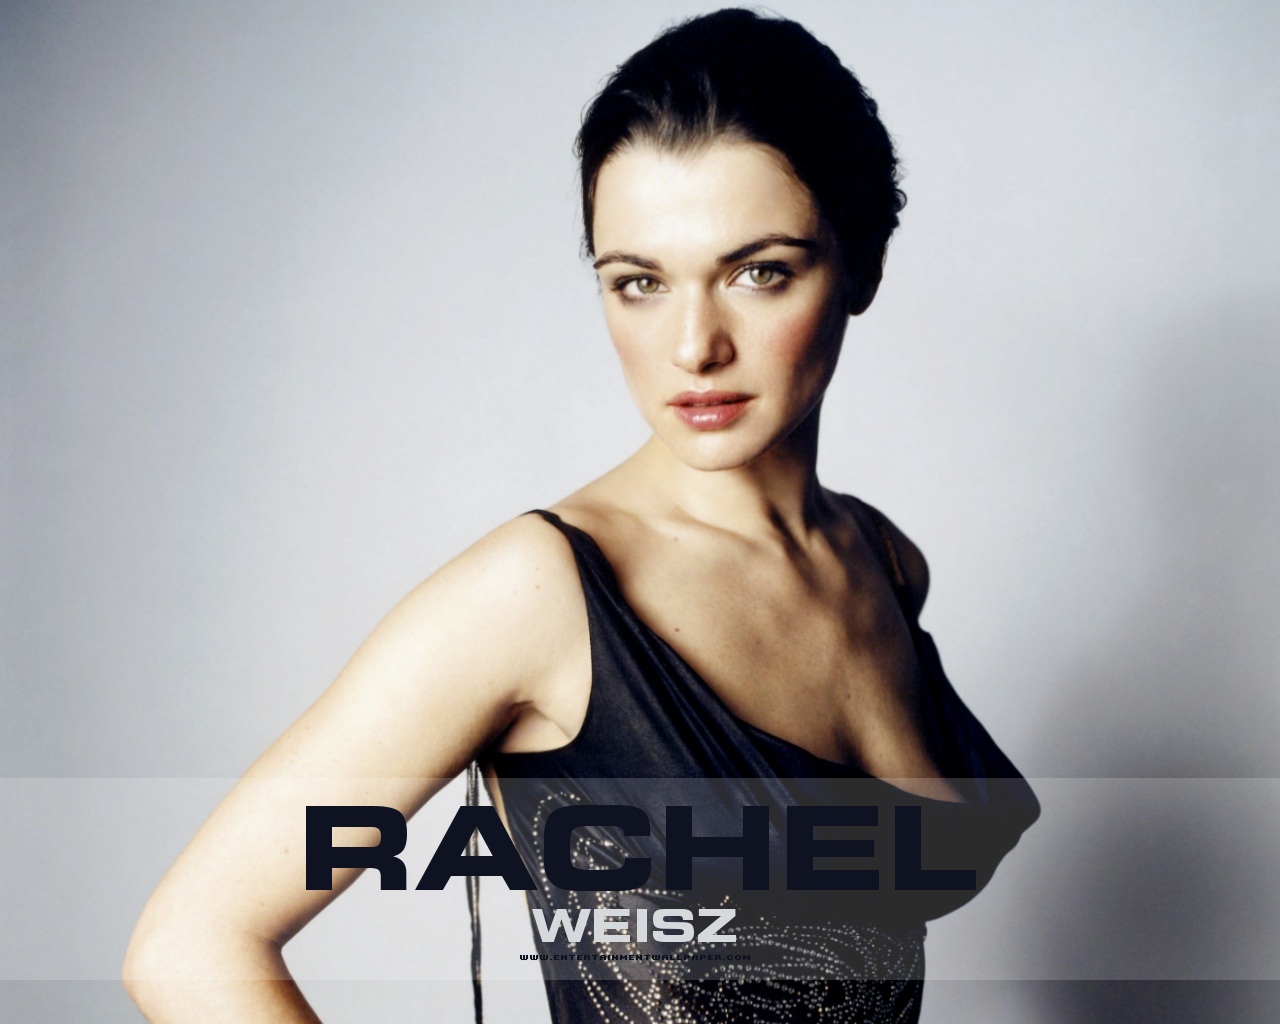 Beautiful Rachel - Rachel Weisz Wallpaper (23850882) - Fanpop